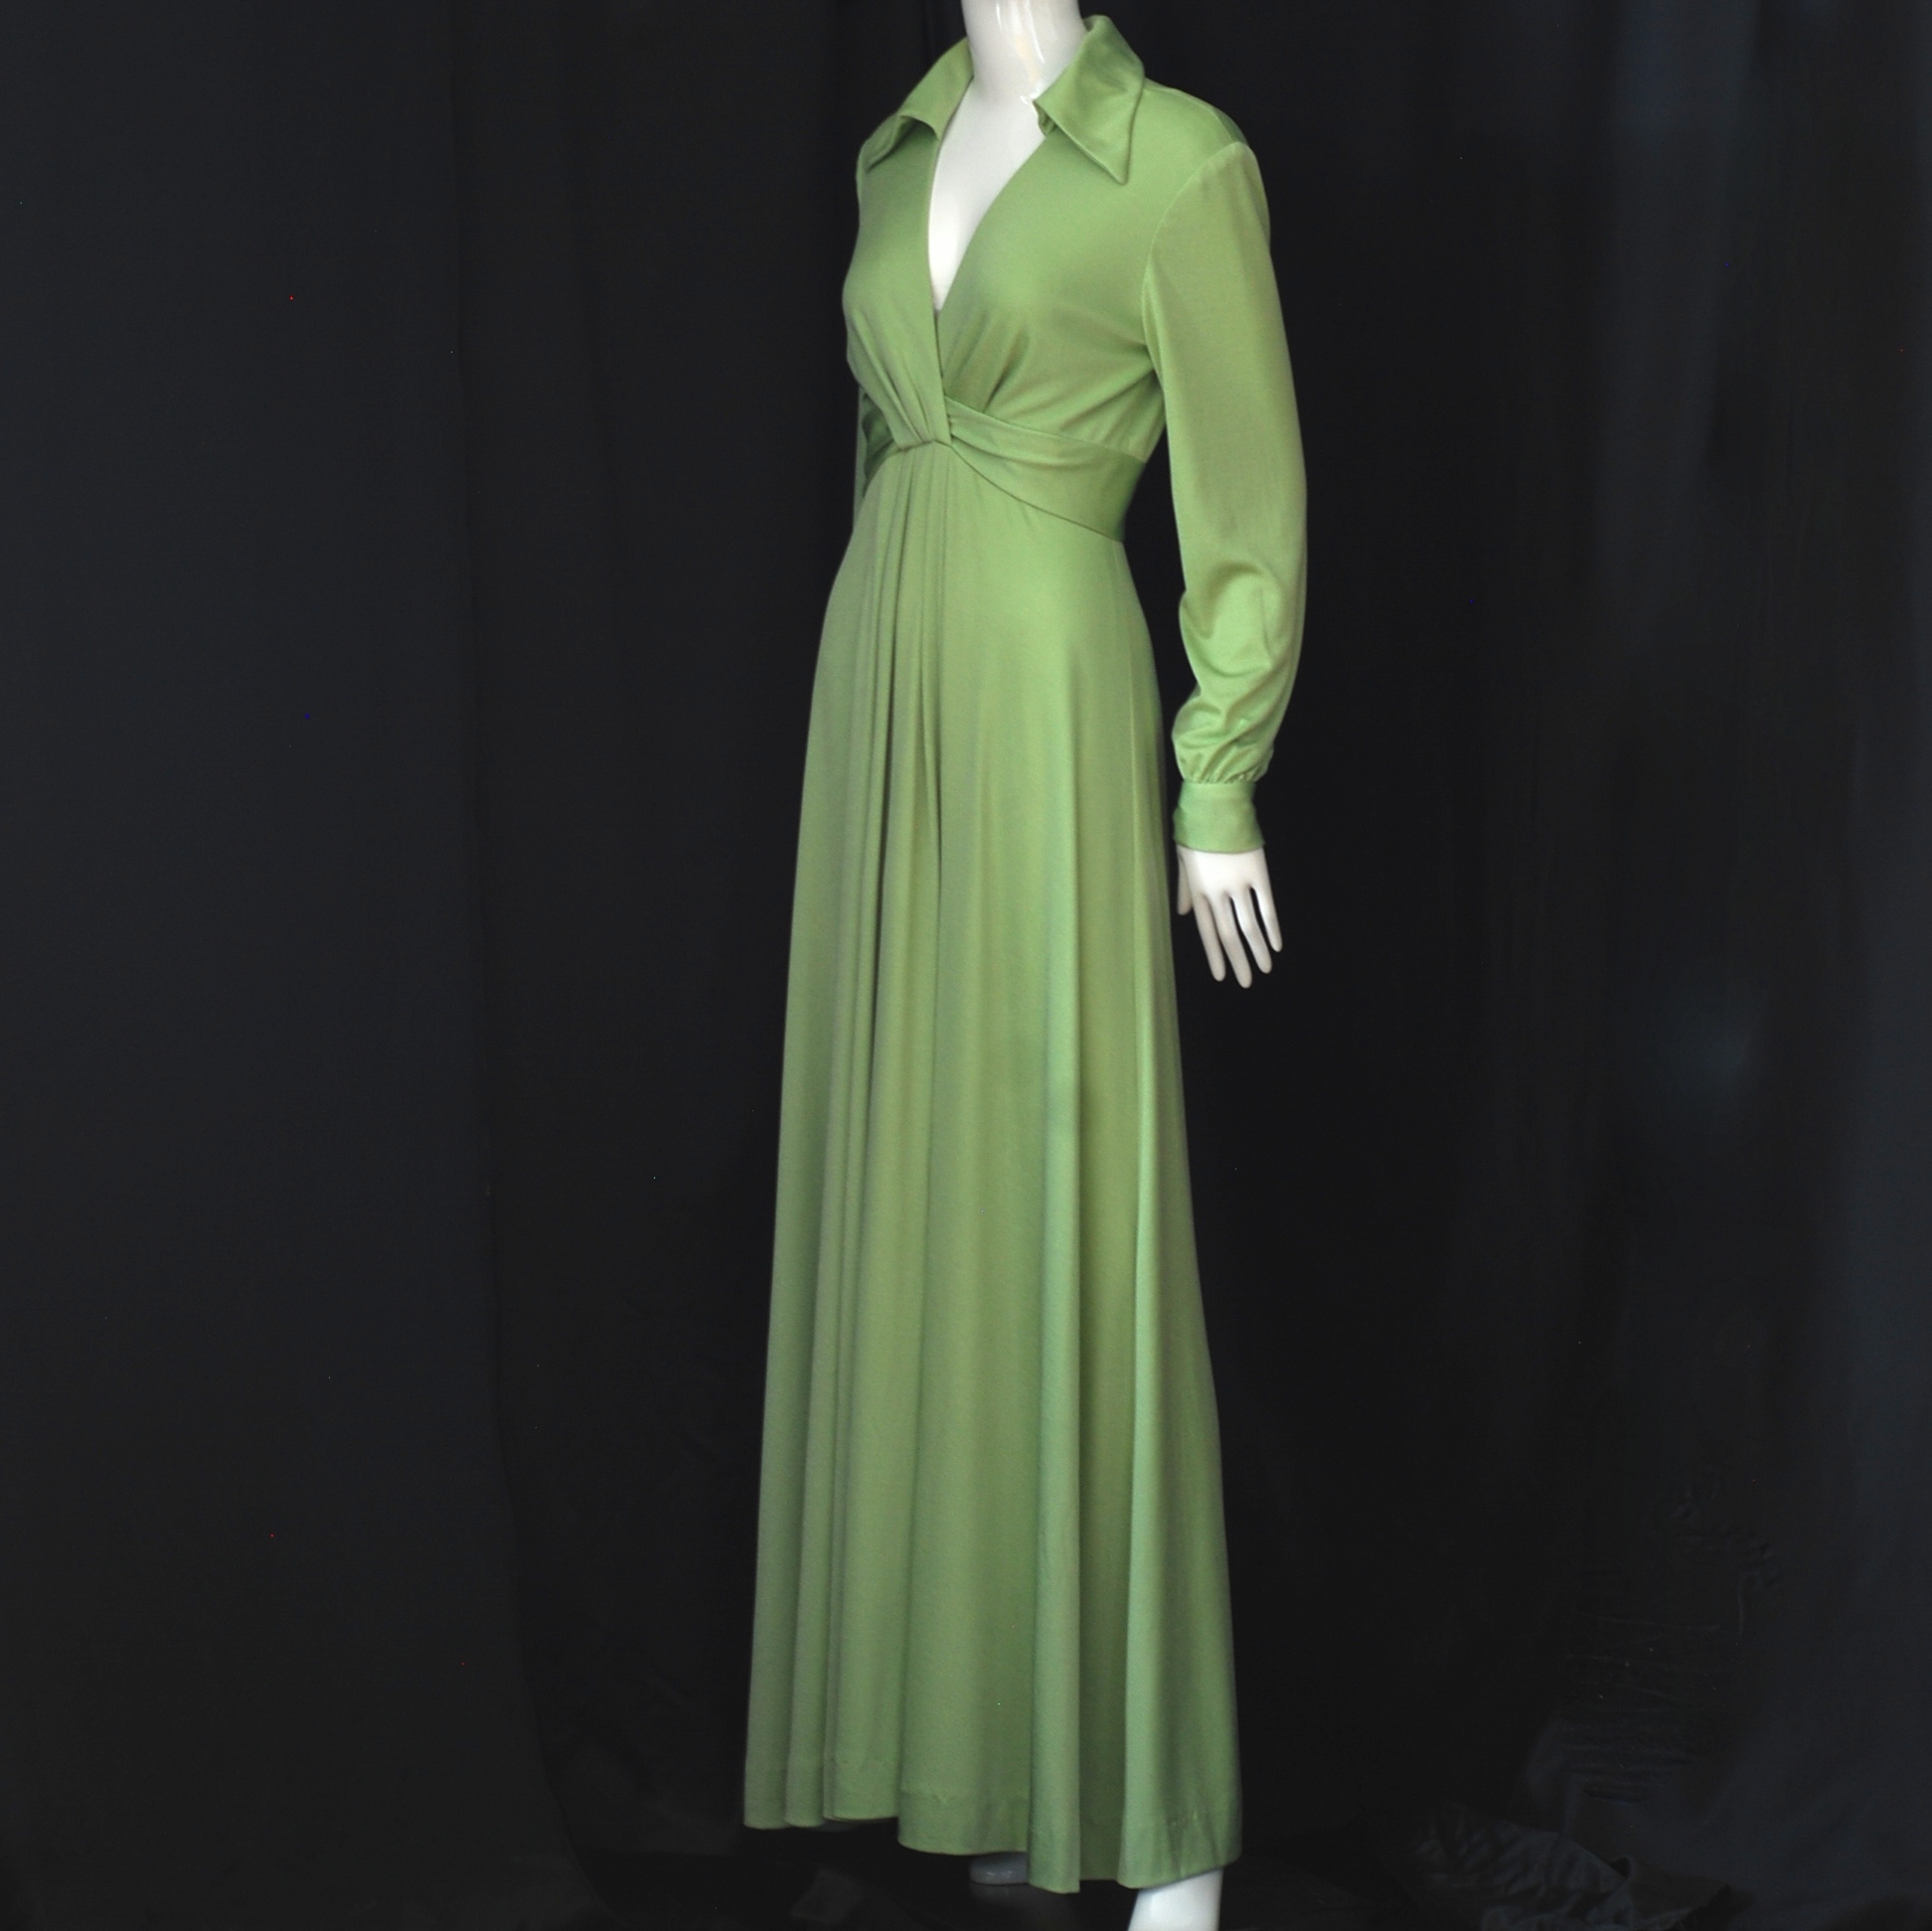 Estevez The Eva Gabor Look 1960’s Apple Green Maxi Dress QUIET WEST.